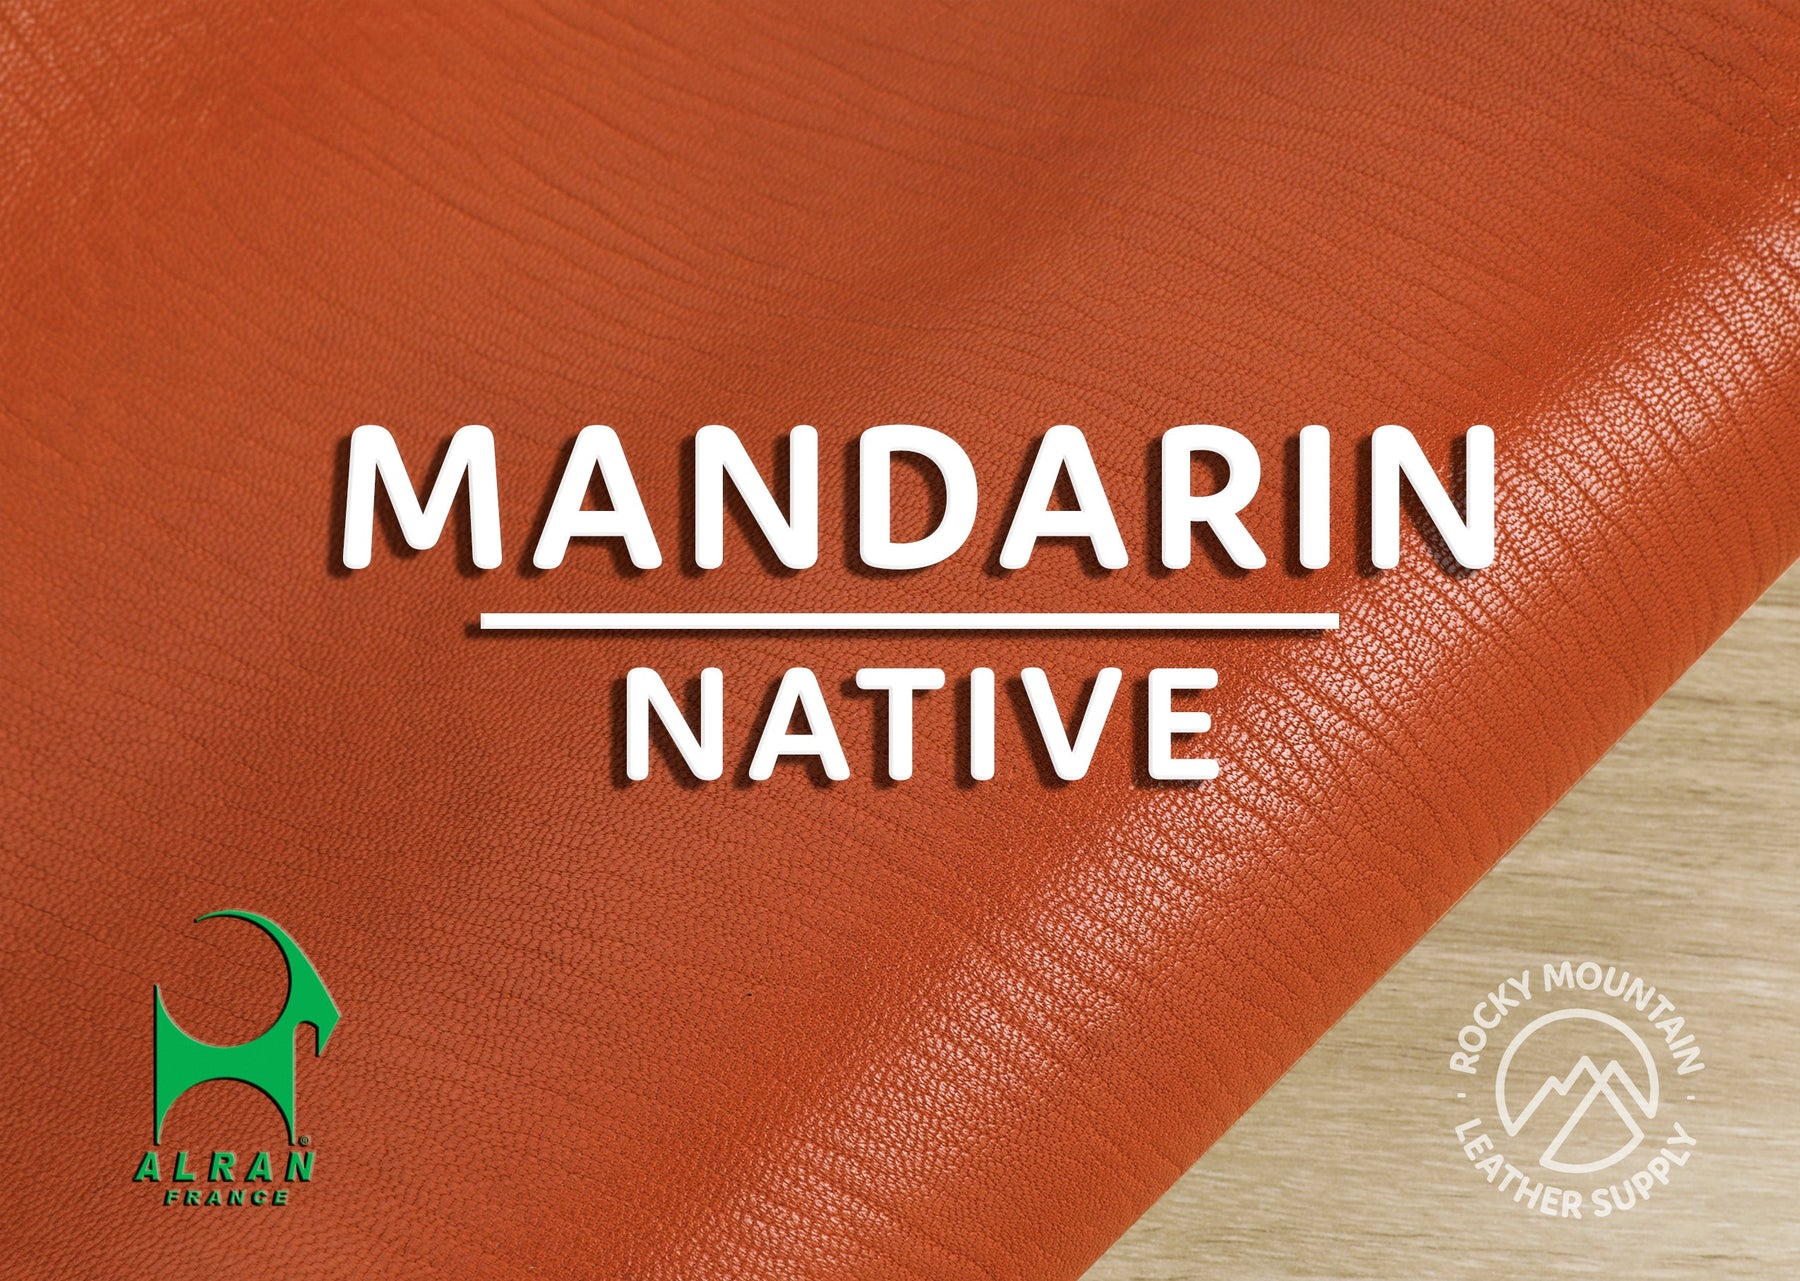 Alran 🇫🇷 - Chevre "Native" - Rustic Goat Leather (SAMPLES)